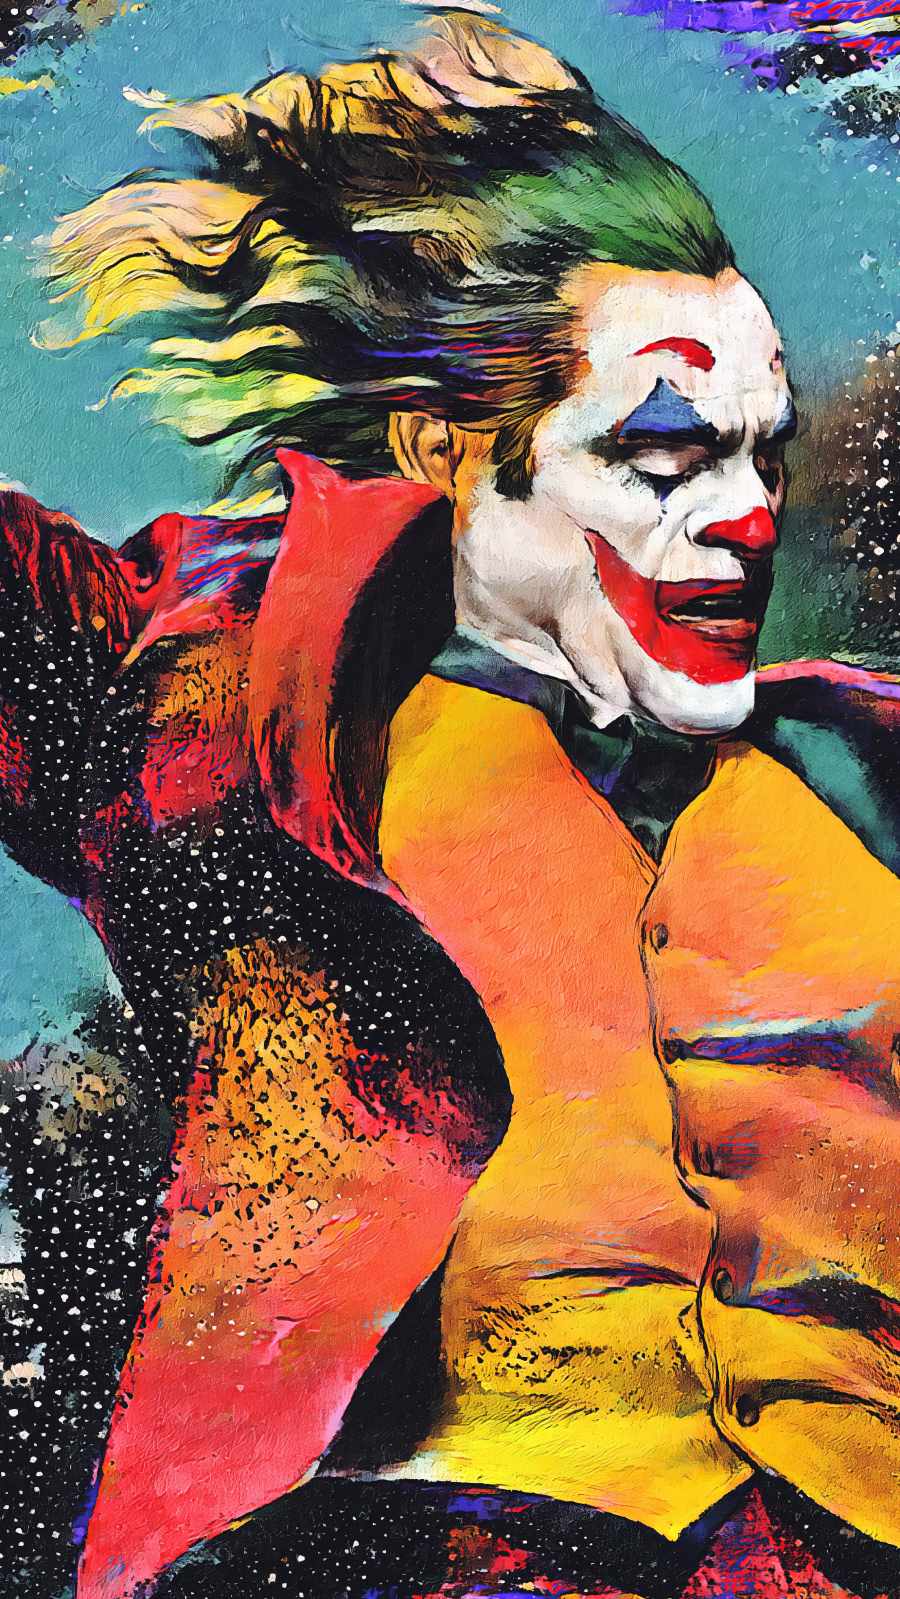 Joker Painting 4K IPhone Wallpaper - IPhone Wallpapers : iPhone Wallpapers